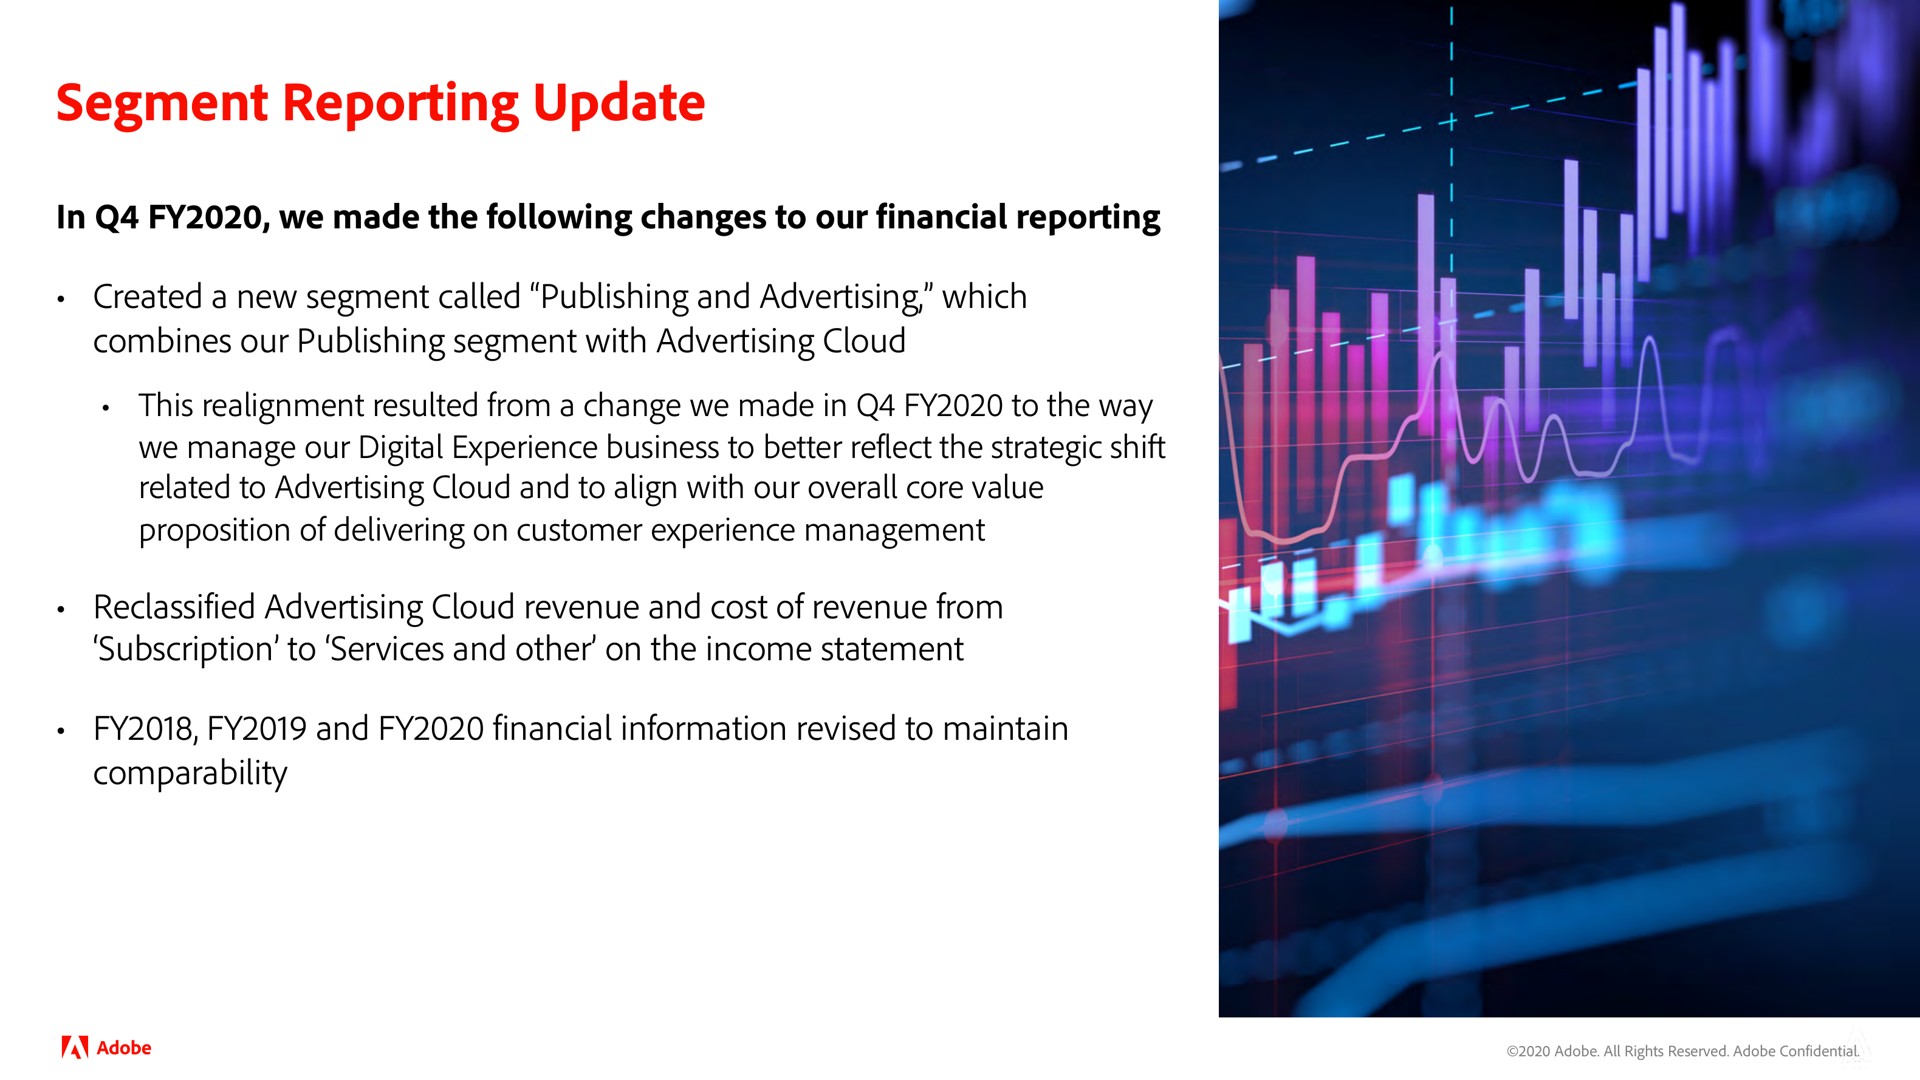 segment reporting update | Adobe